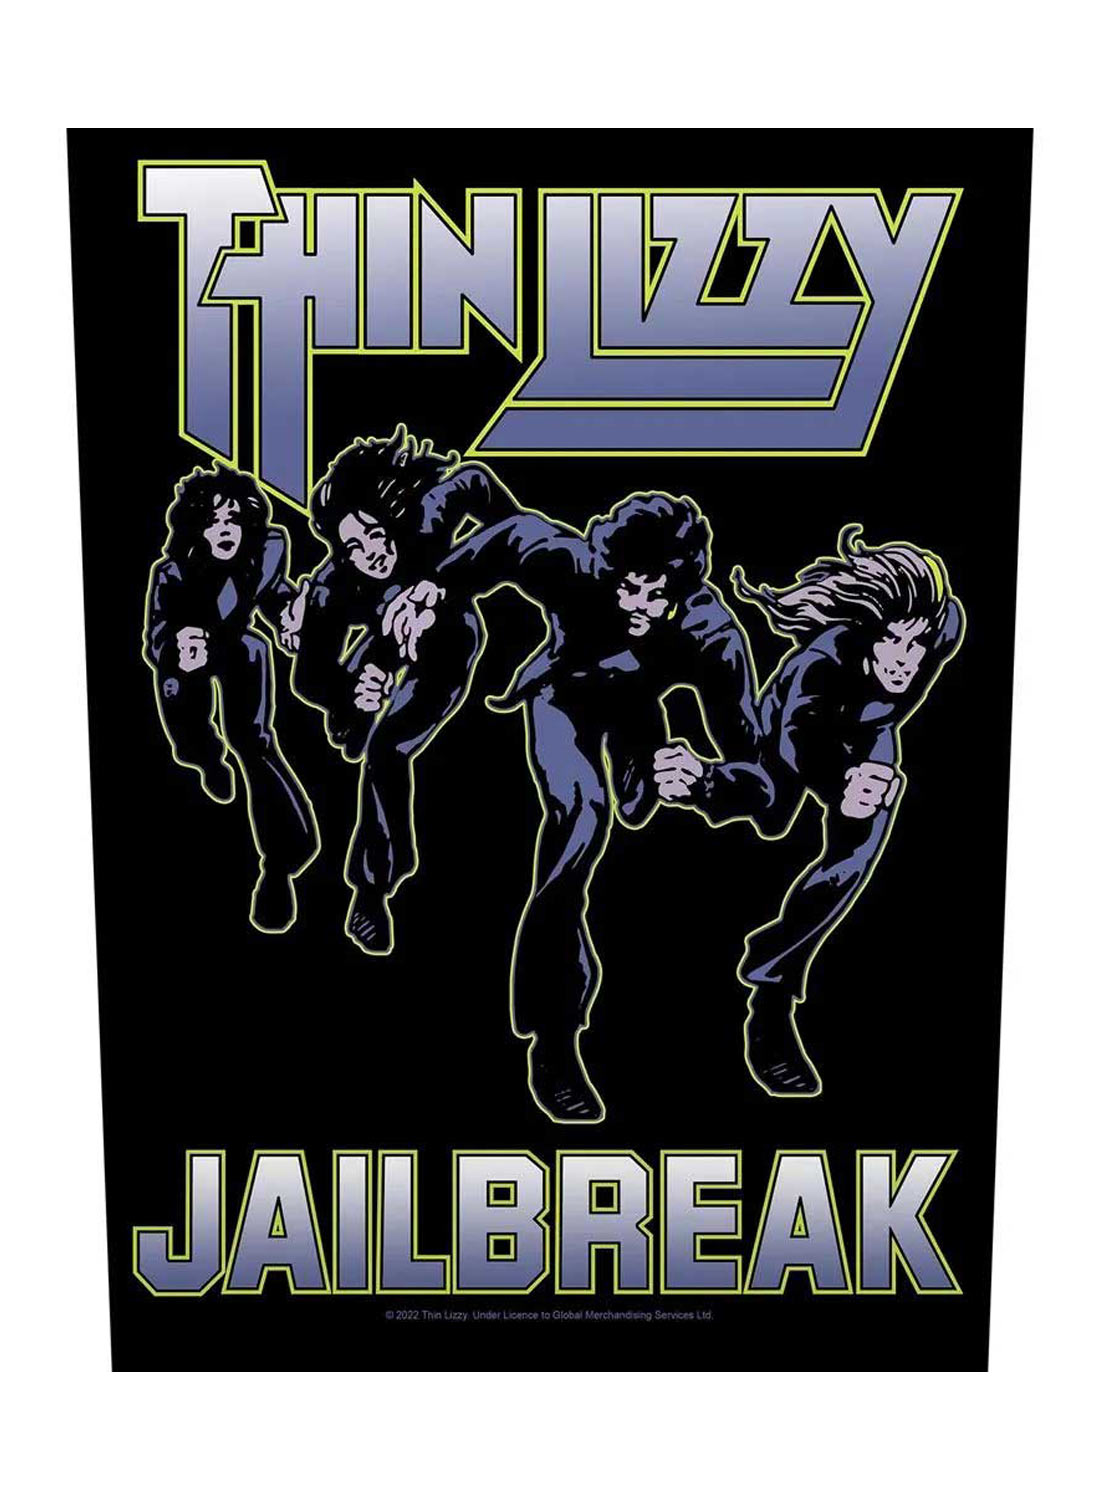 Thin Lizzy Jailbreak Back Patch